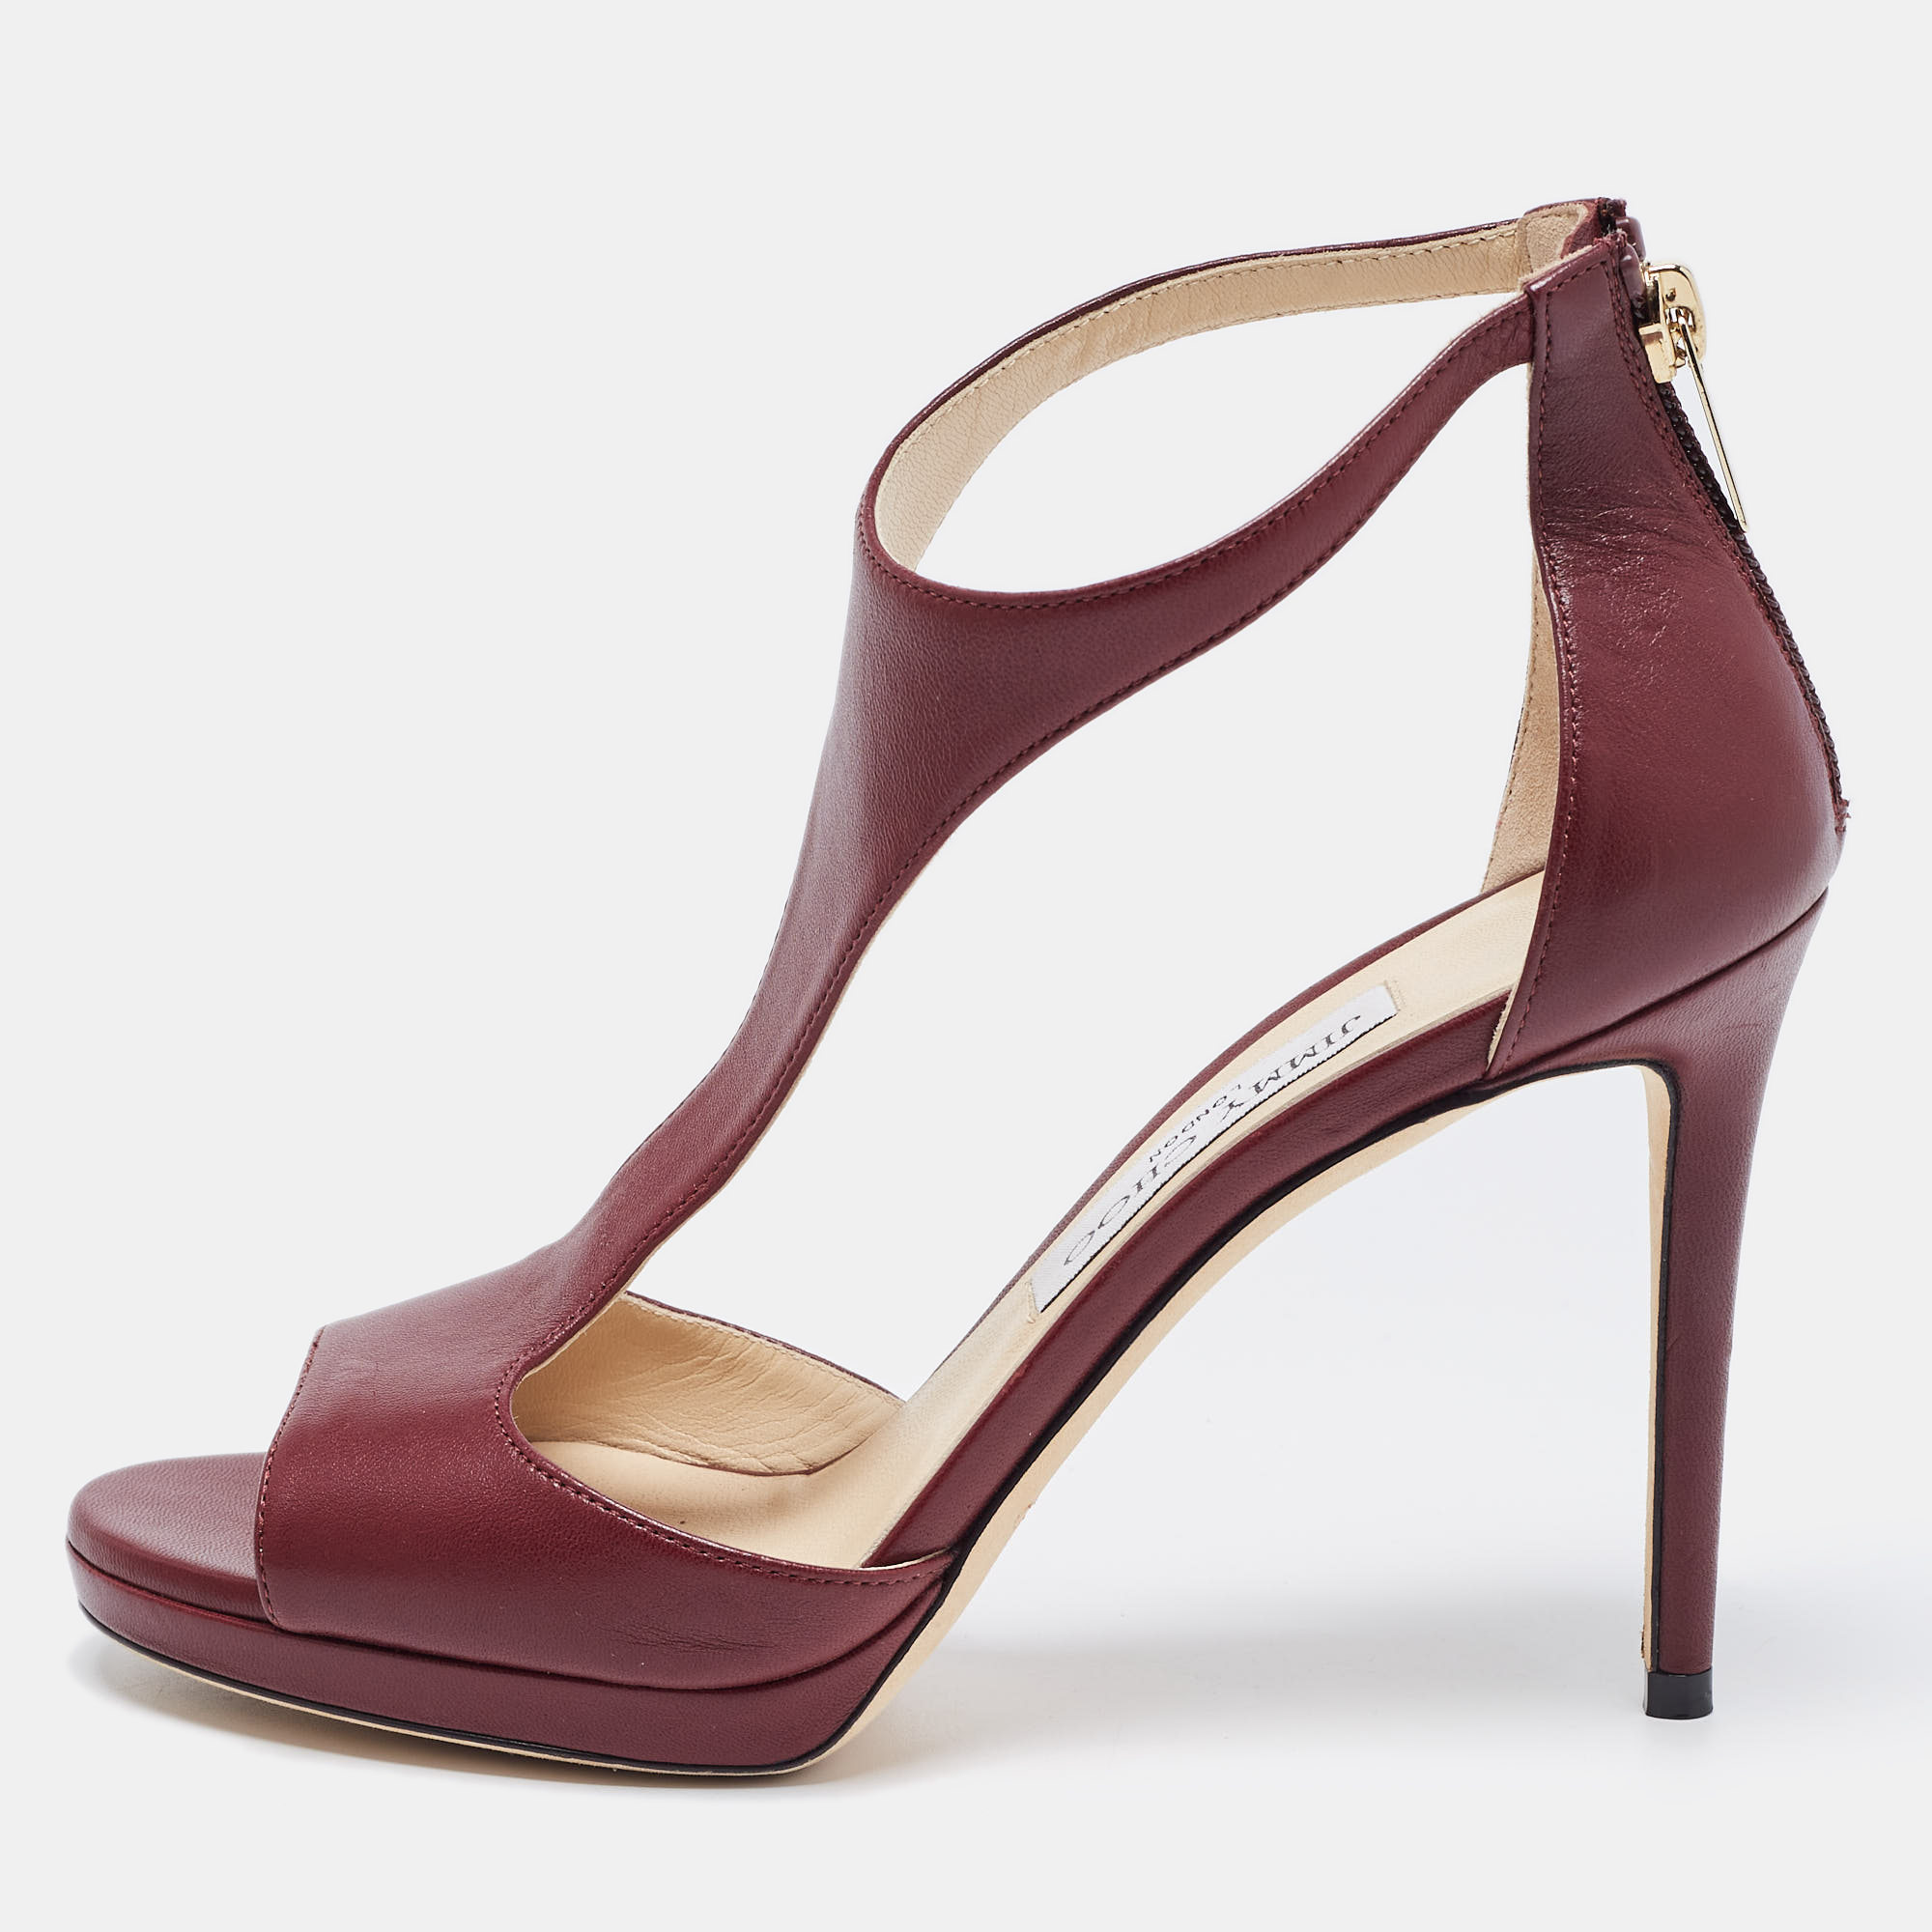 Jimmy choo burgundy leather lana sandals size 37.5